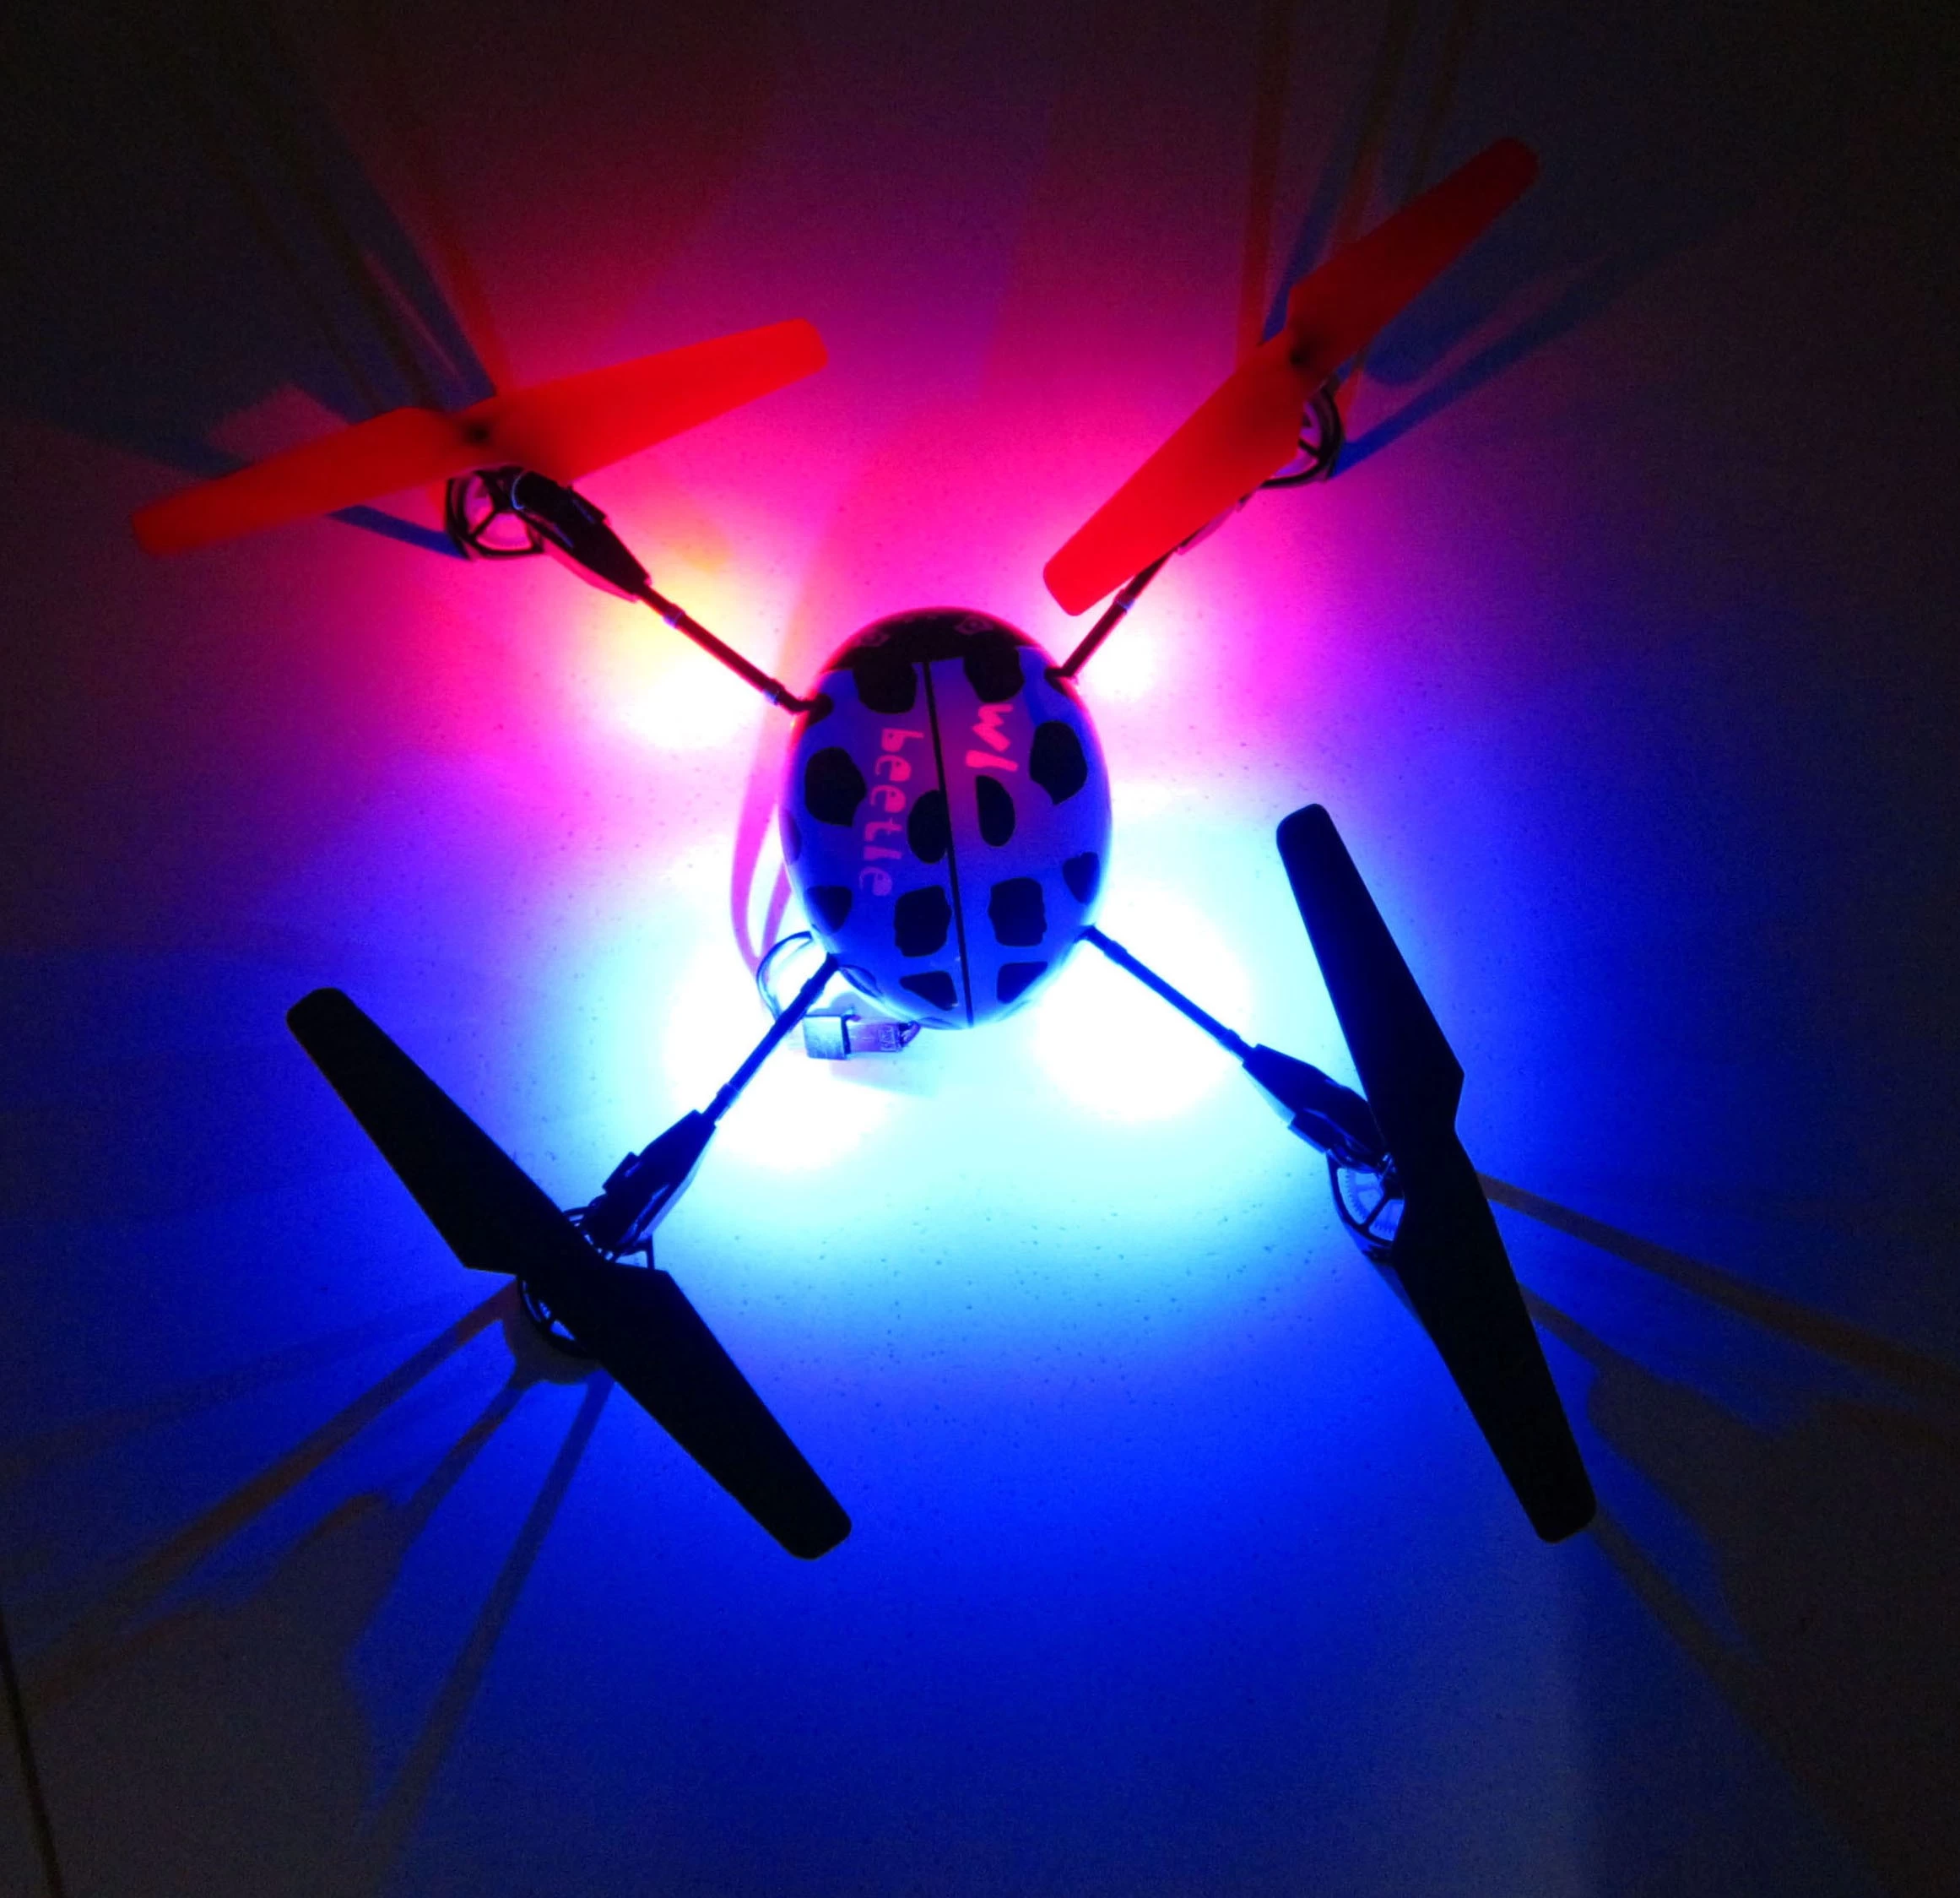 RC quadcopter,2.4G,RC drone